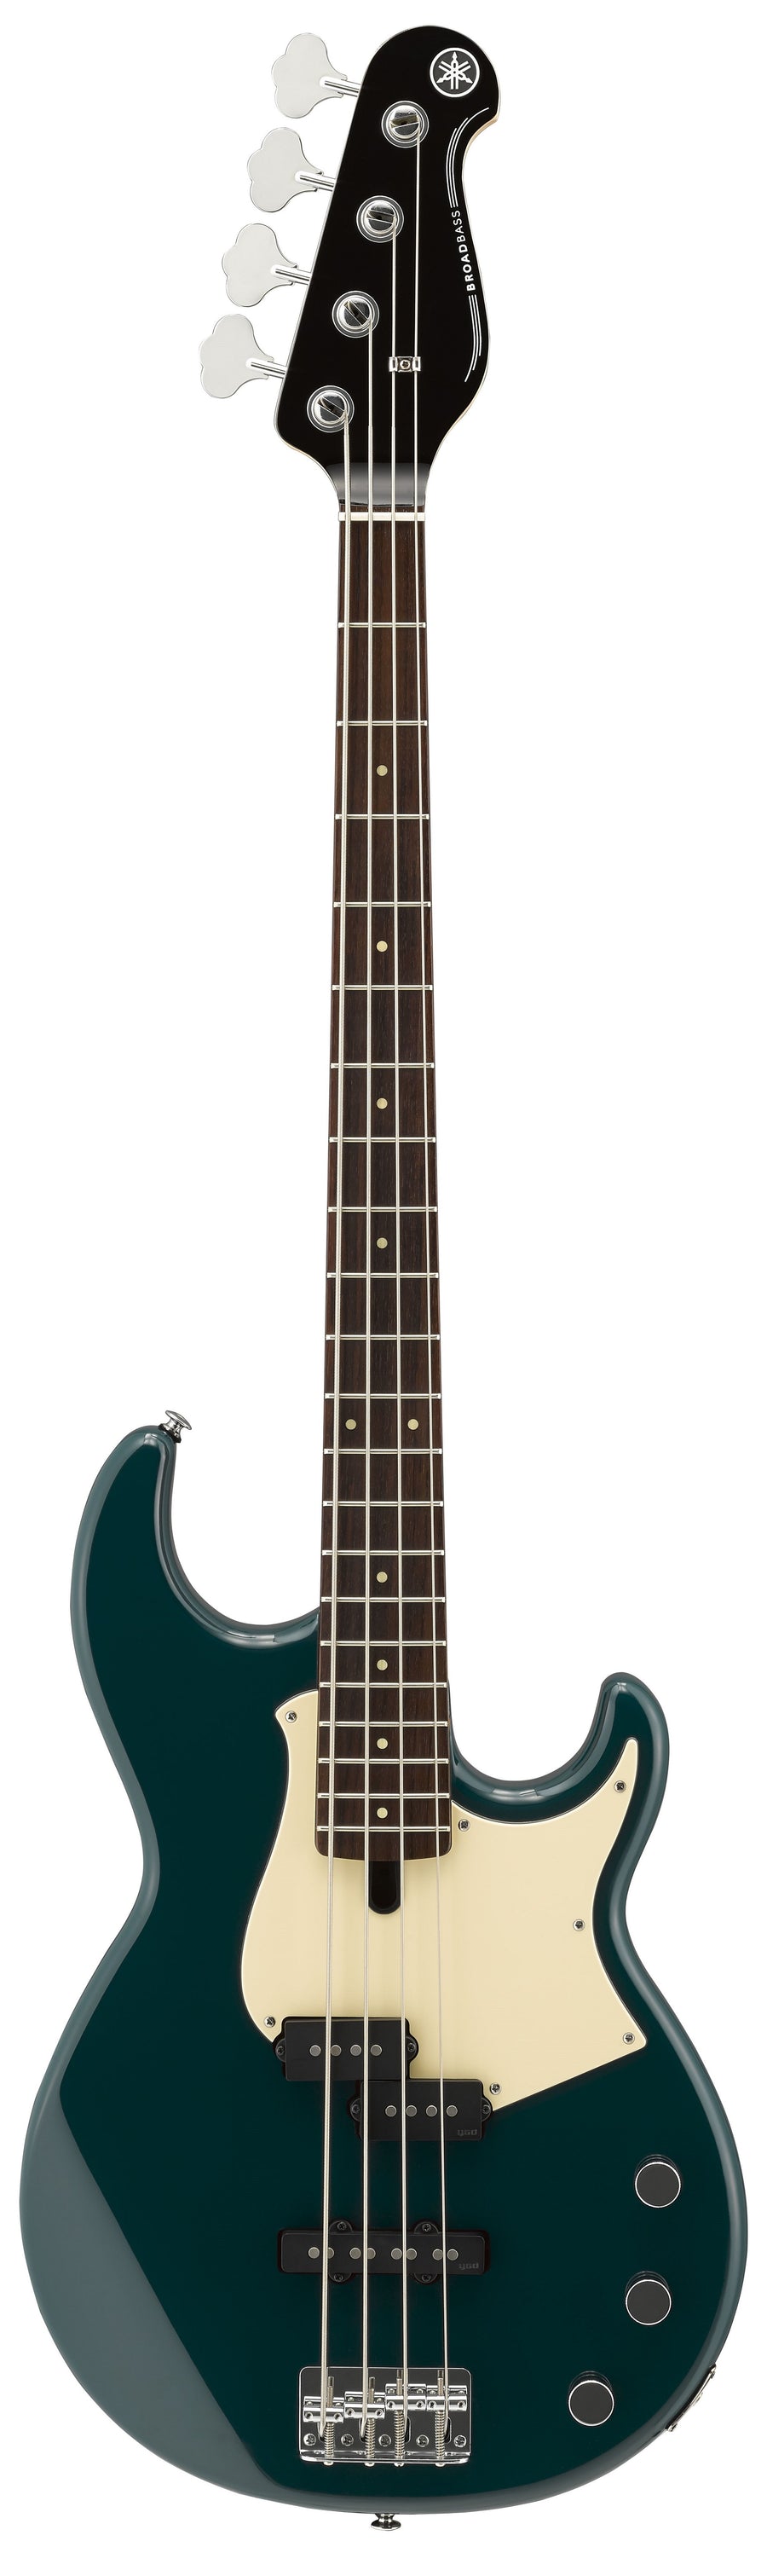 Yamaha BB434 4-String Bass Guitar - Teal Blue